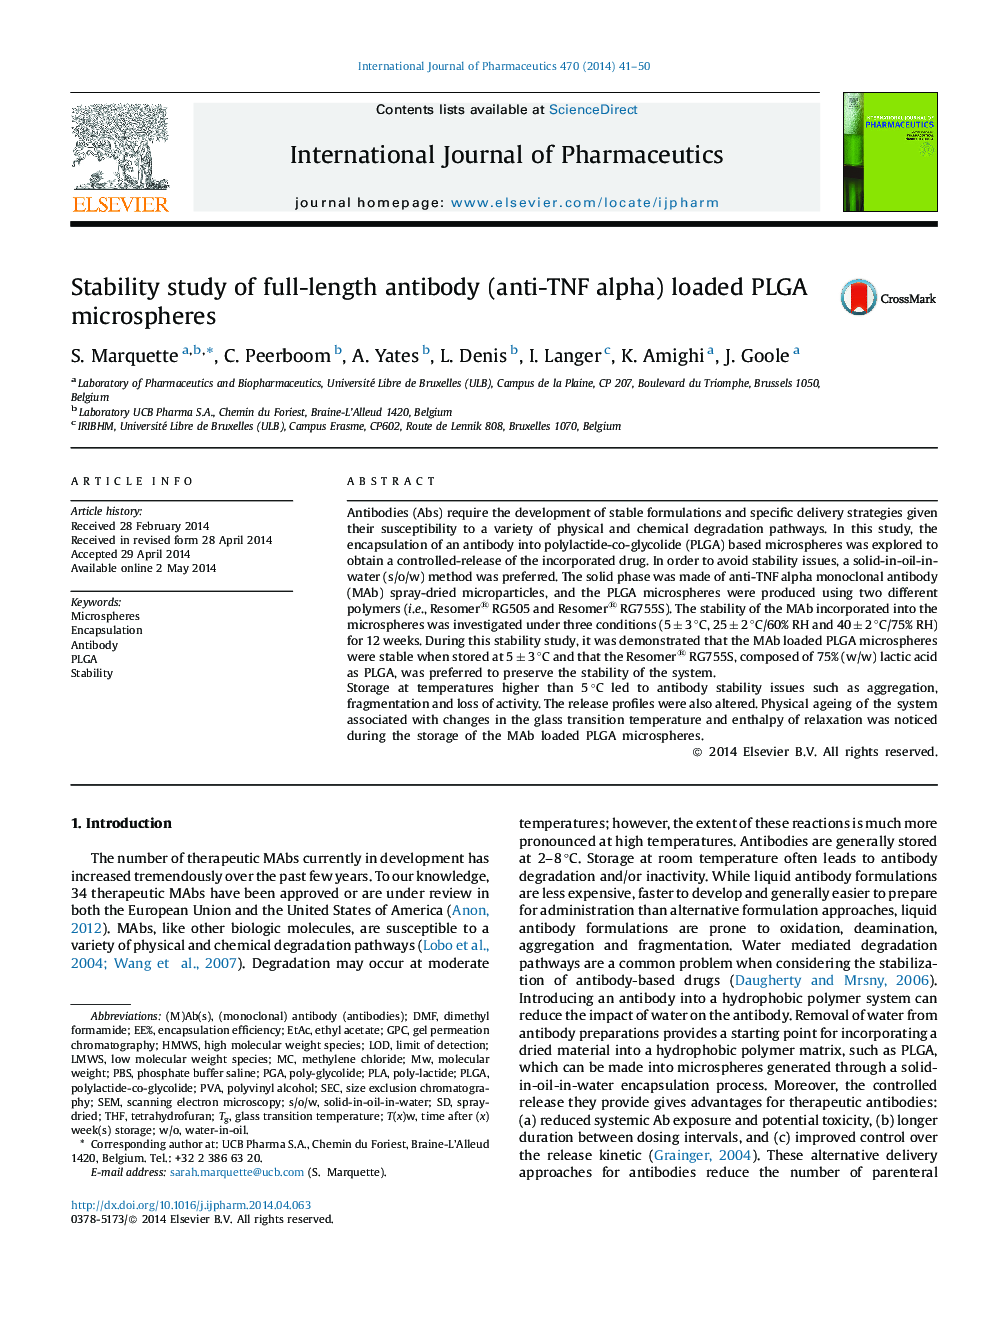 Stability study of full-length antibody (anti-TNF alpha) loaded PLGA microspheres